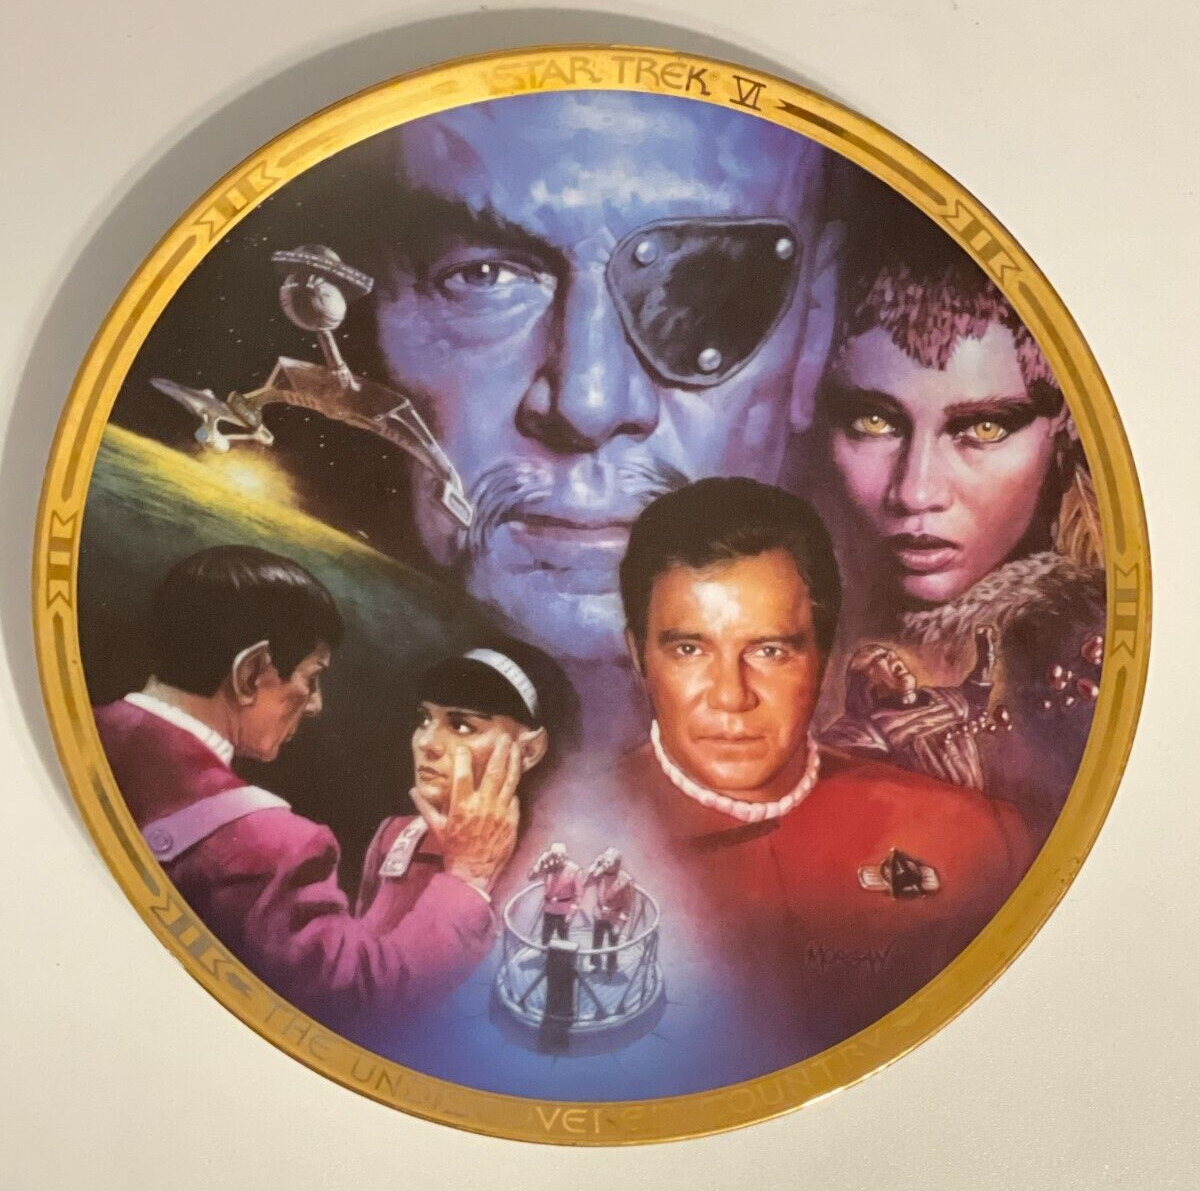 Star Trek Hamilton Collector Plate Star Trek VI: The Undiscovered Country #0508D